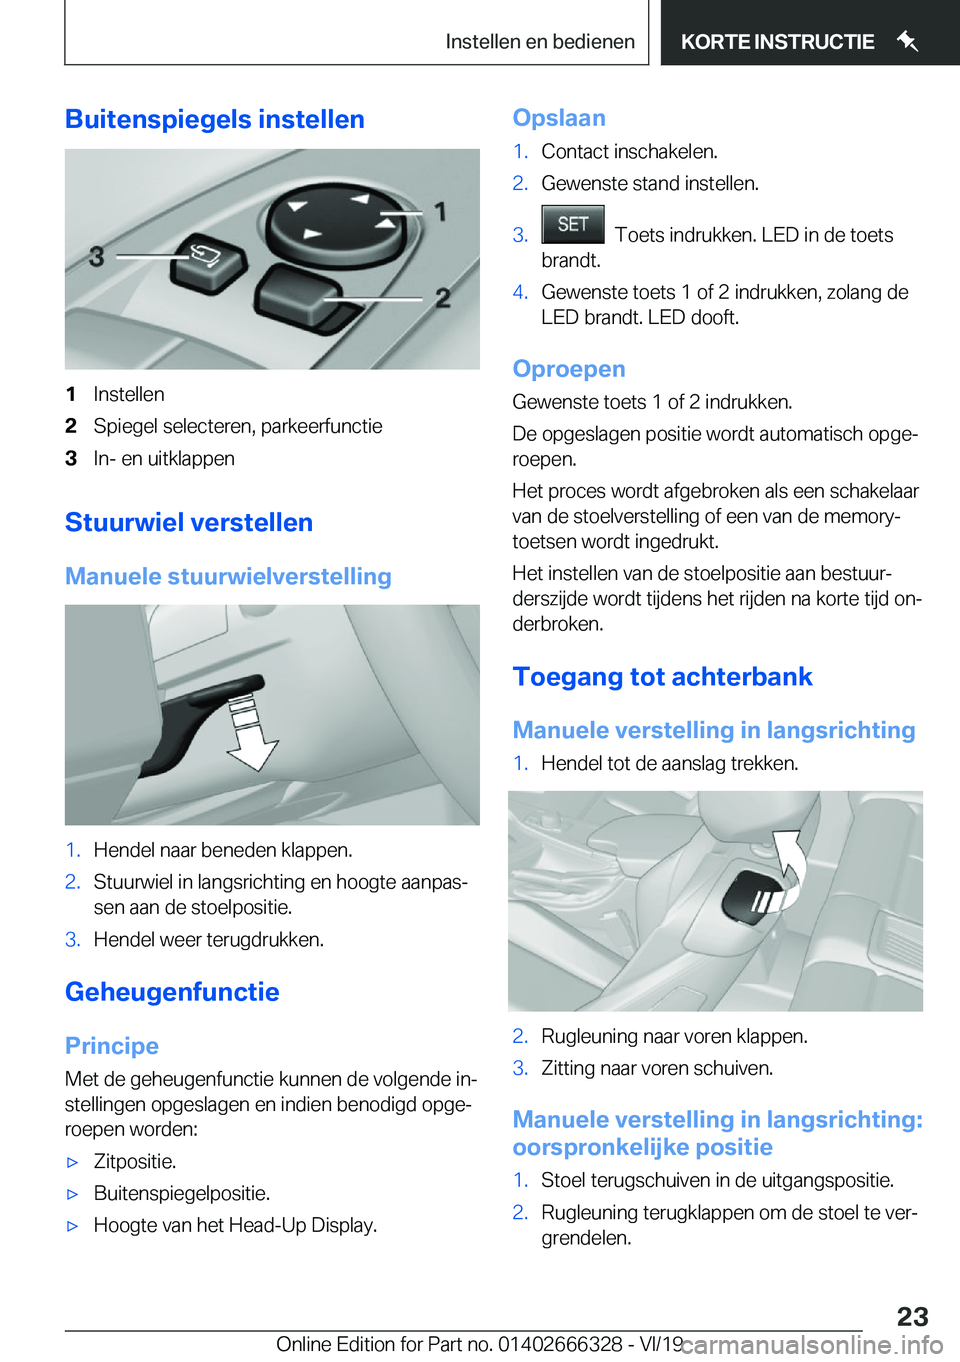 BMW 4 SERIES COUPE 2020  Instructieboekjes (in Dutch) �B�u�i�t�e�n�s�p�i�e�g�e�l�s��i�n�s�t�e�l�l�e�n�1�I�n�s�t�e�l�l�e�n�2�S�p�i�e�g�e�l��s�e�l�e�c�t�e�r�e�n�,��p�a�r�k�e�e�r�f�u�n�c�t�i�e�3�I�n�-��e�n��u�i�t�k�l�a�p�p�e�n
�S�t�u�u�r�w�i�e�l��v�e�